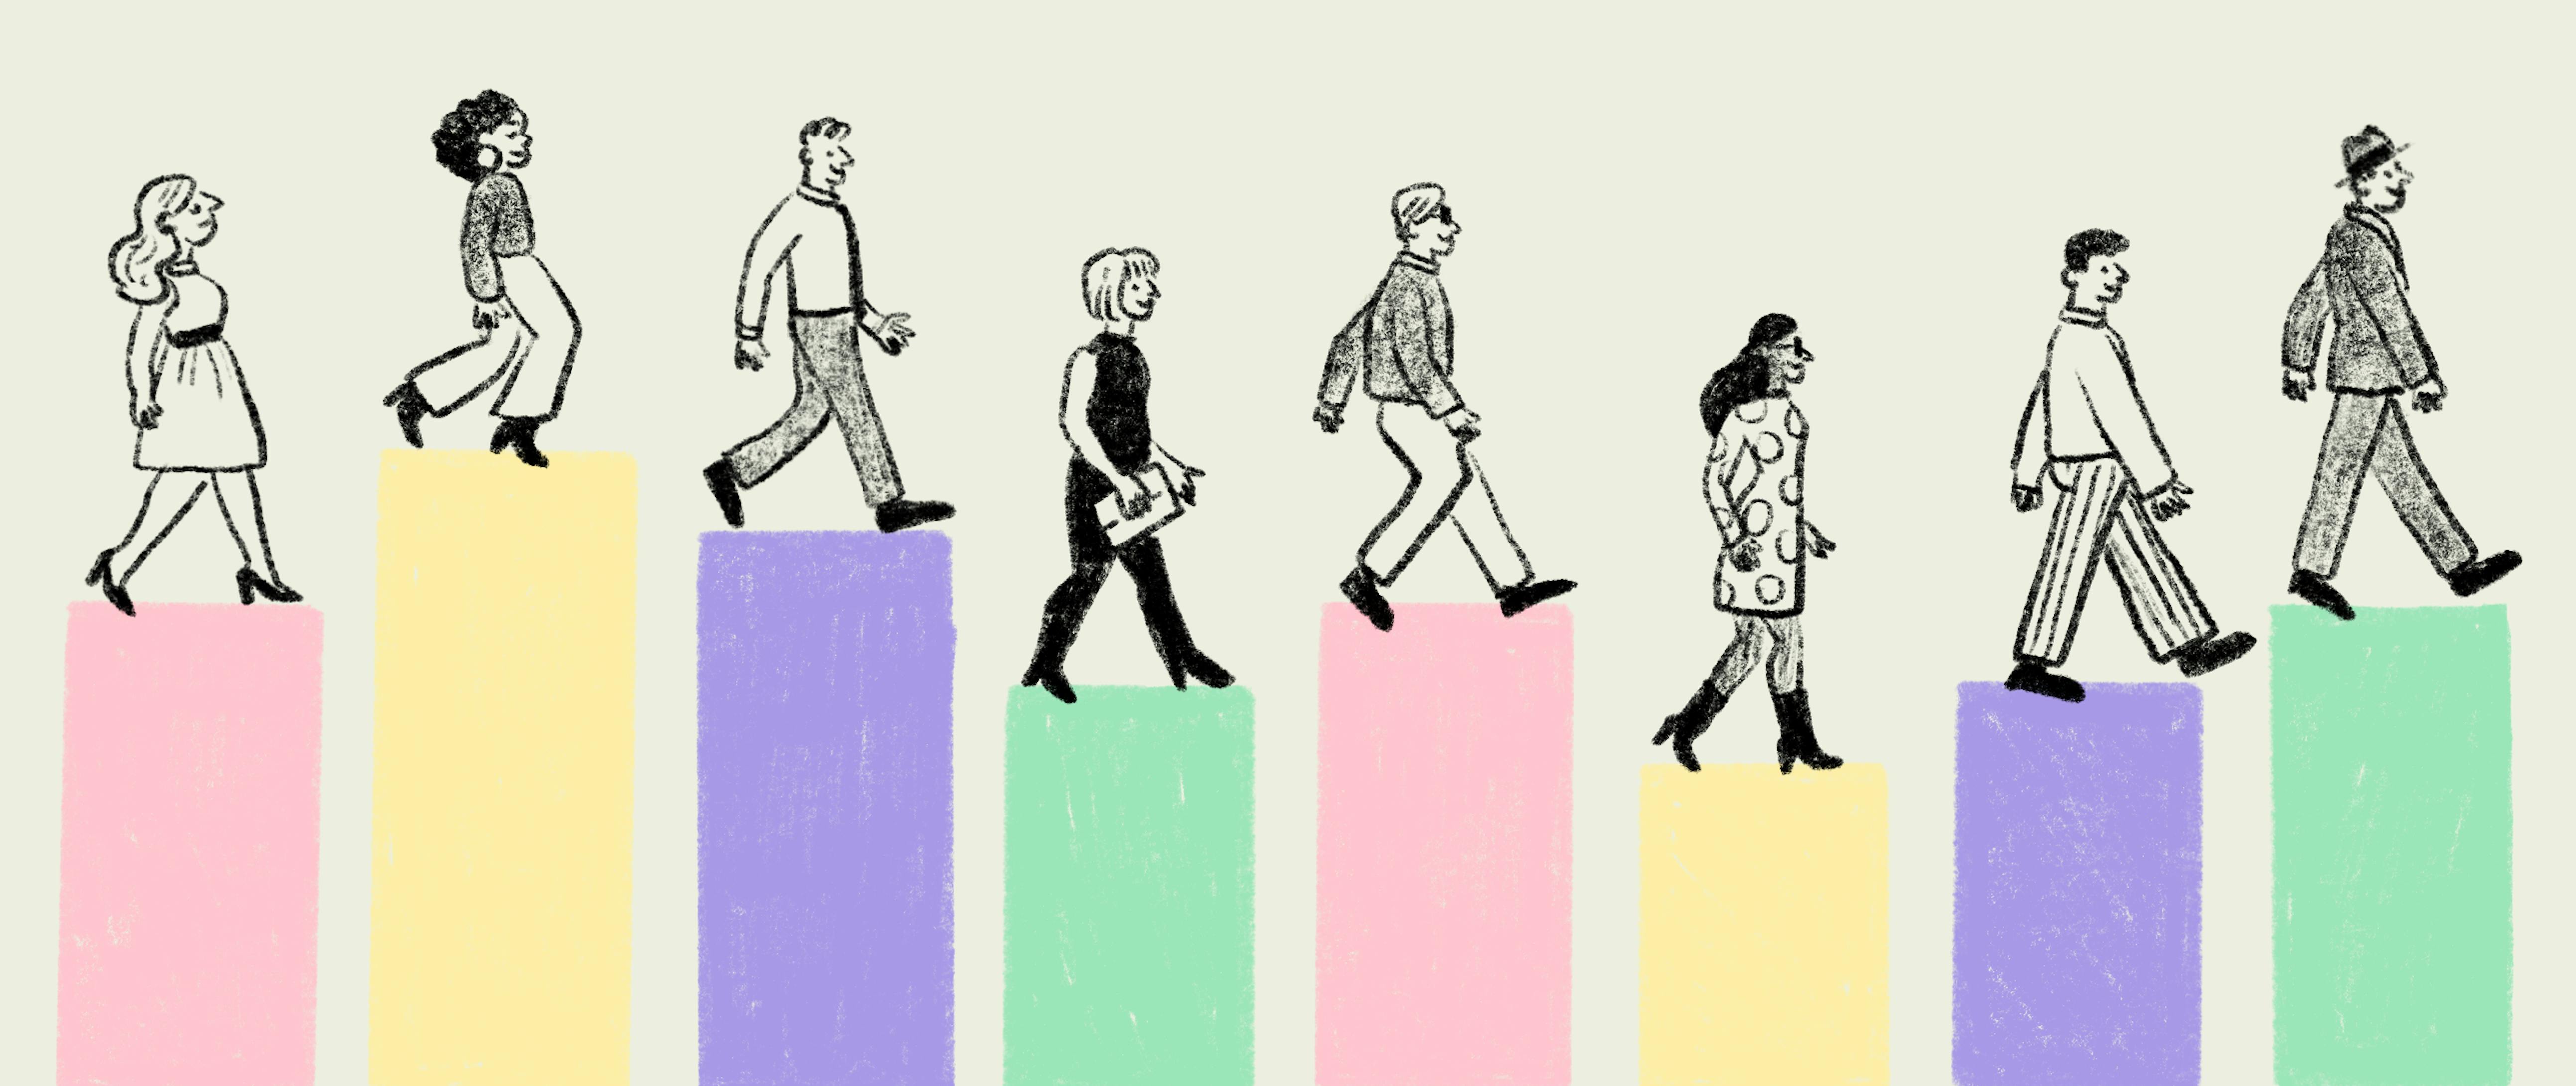 Mensen lopen op gekleurde staven